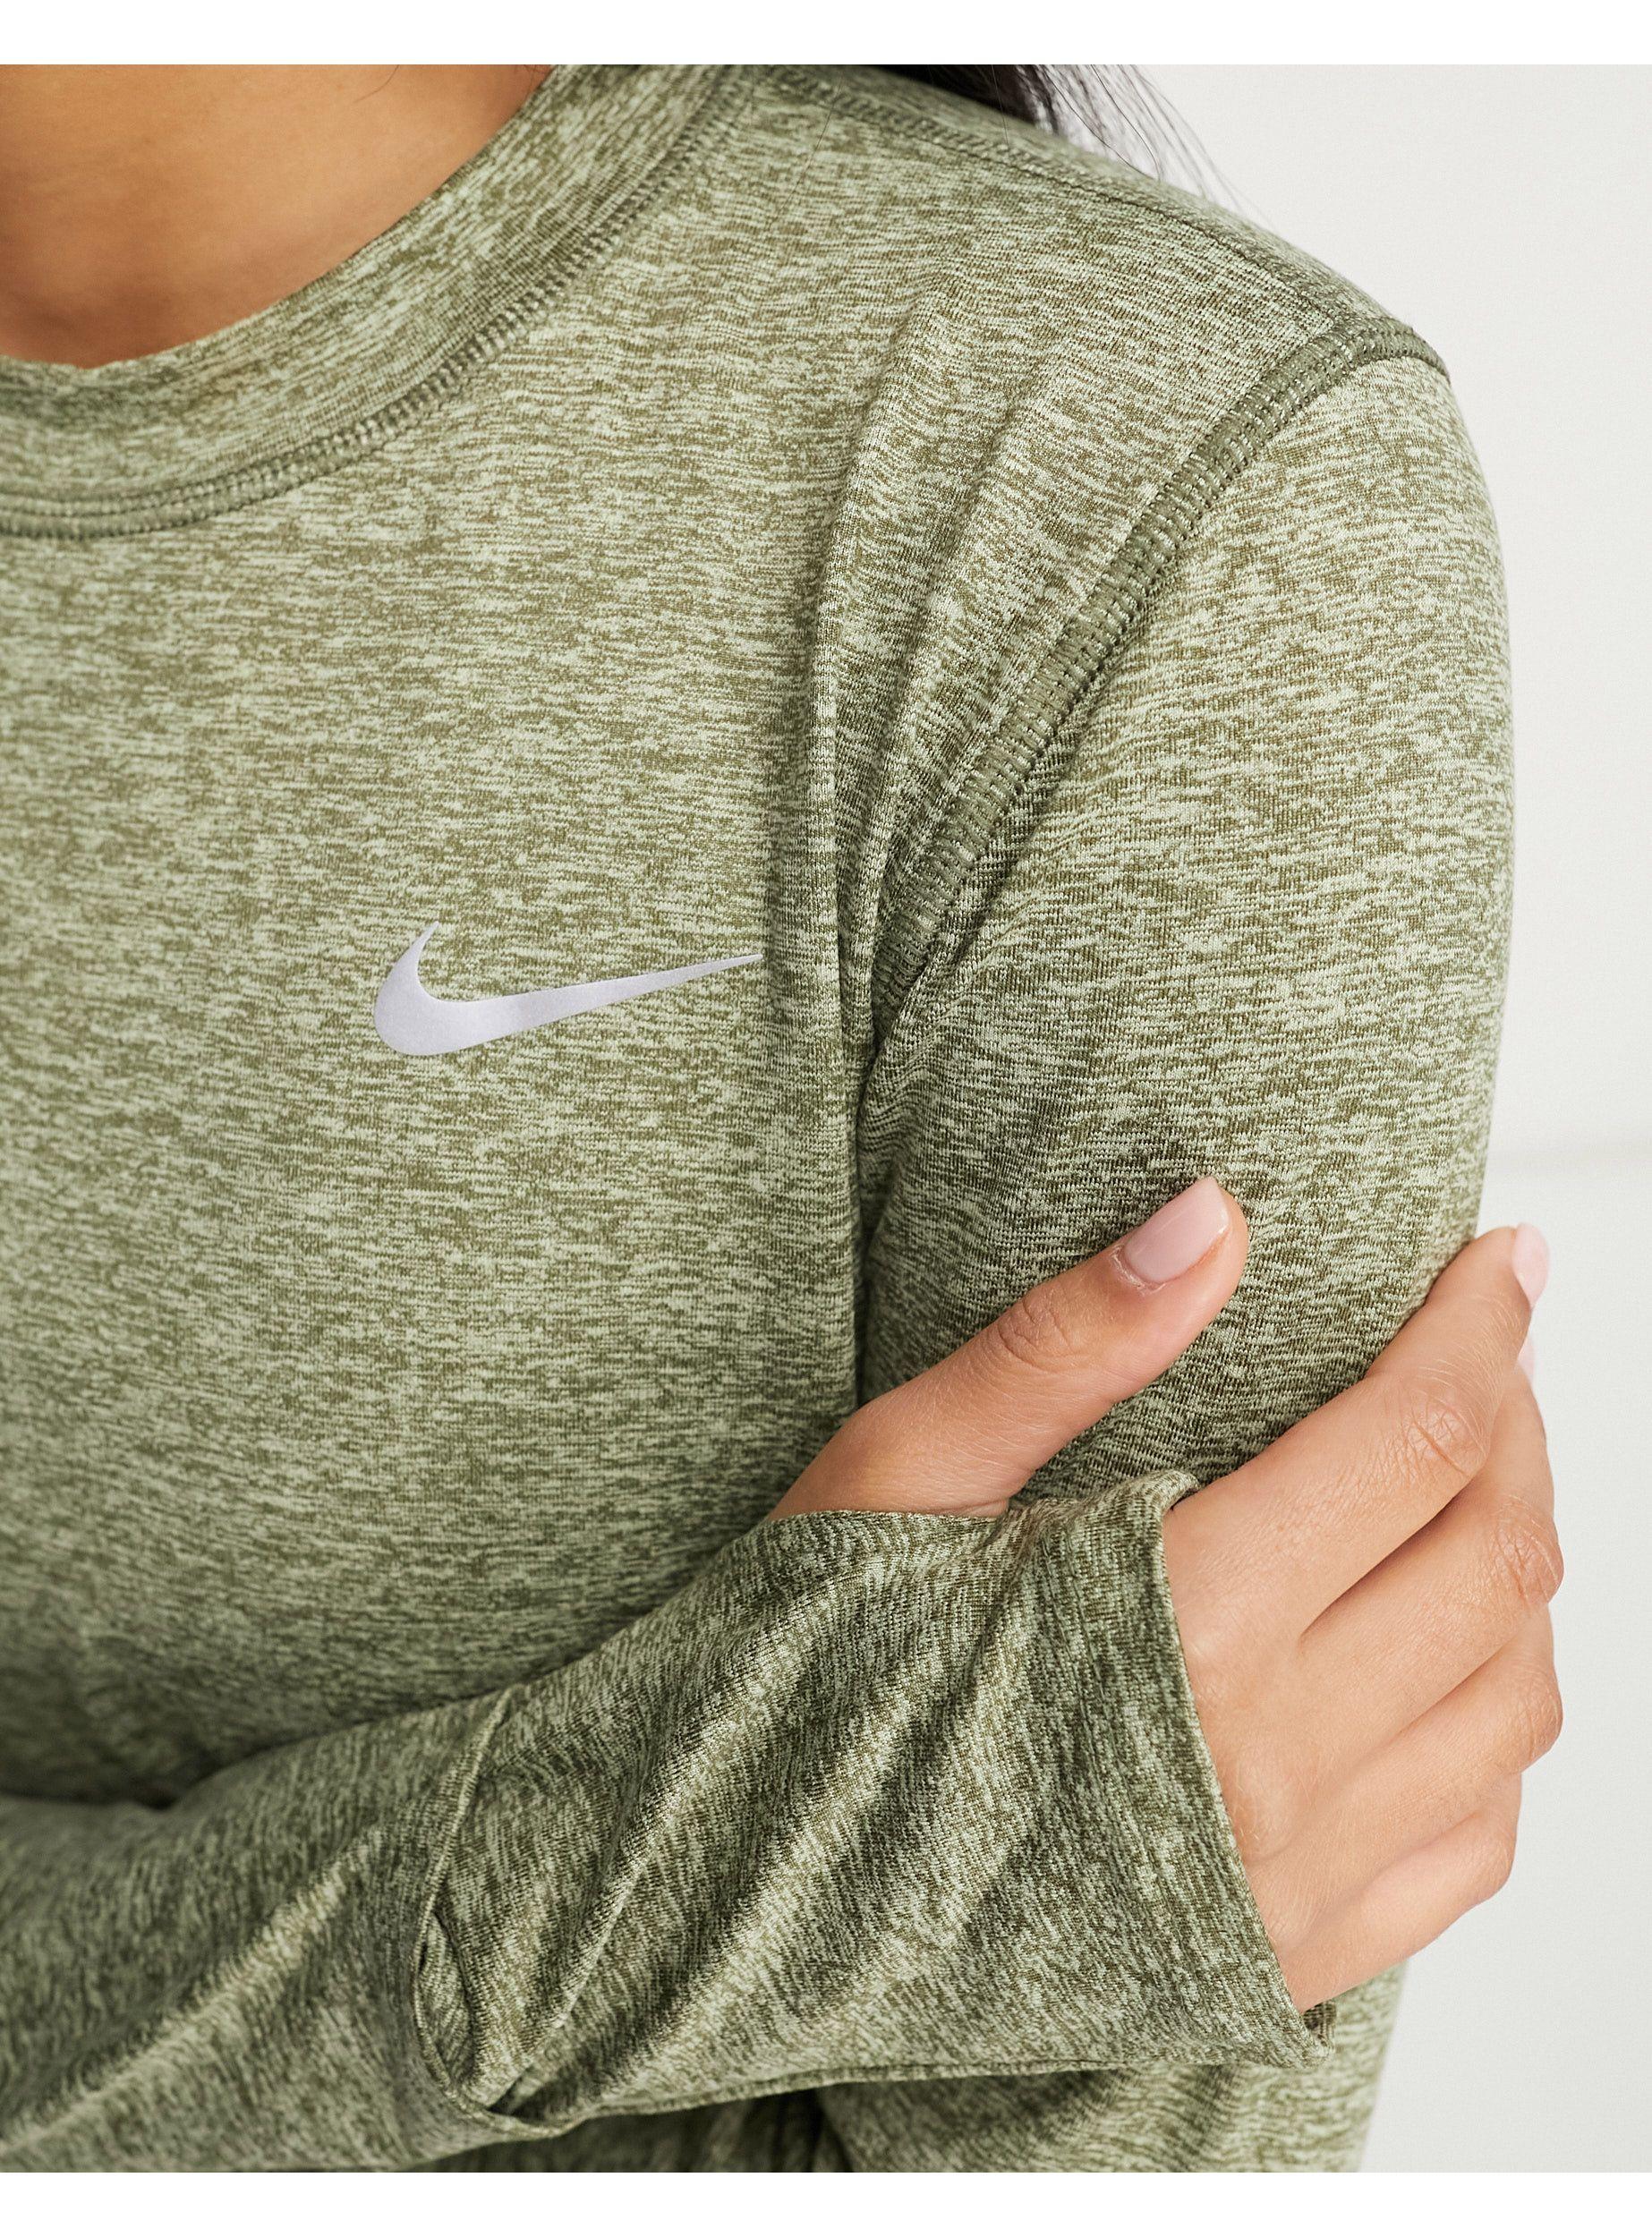 Nike Dri-fit Long Sleeve Top in Green | Lyst